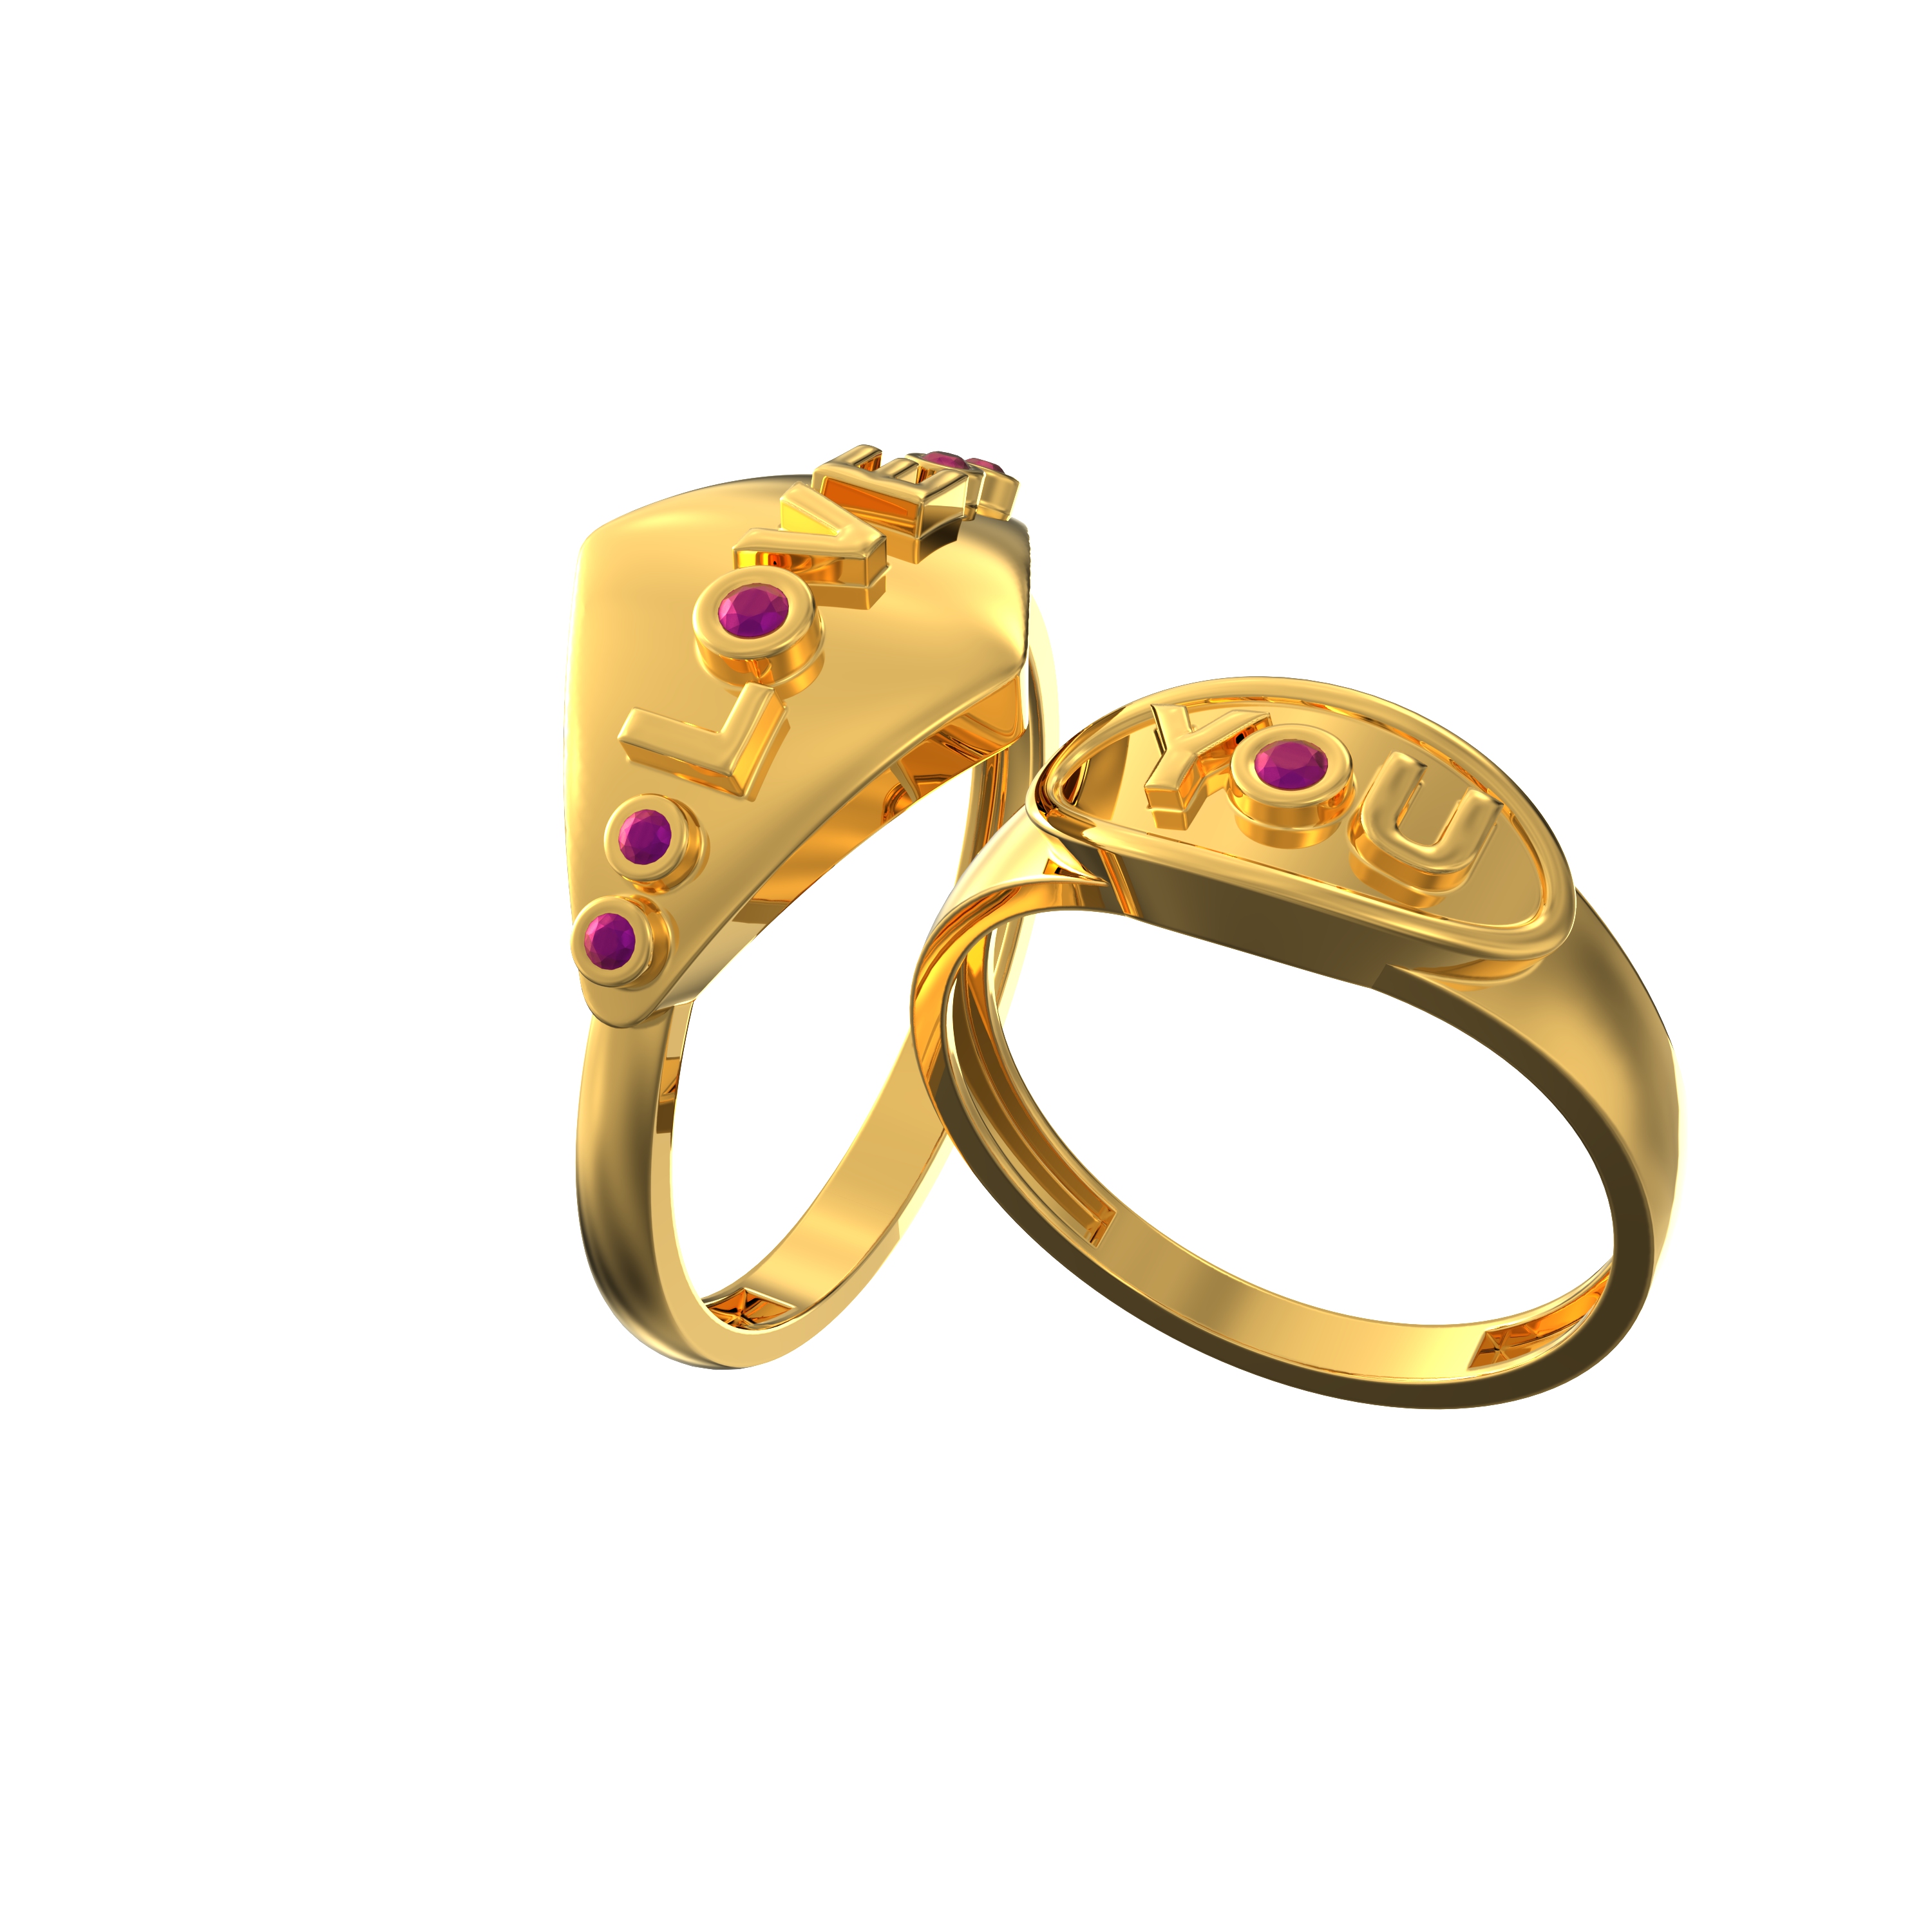 Love-gold-ring